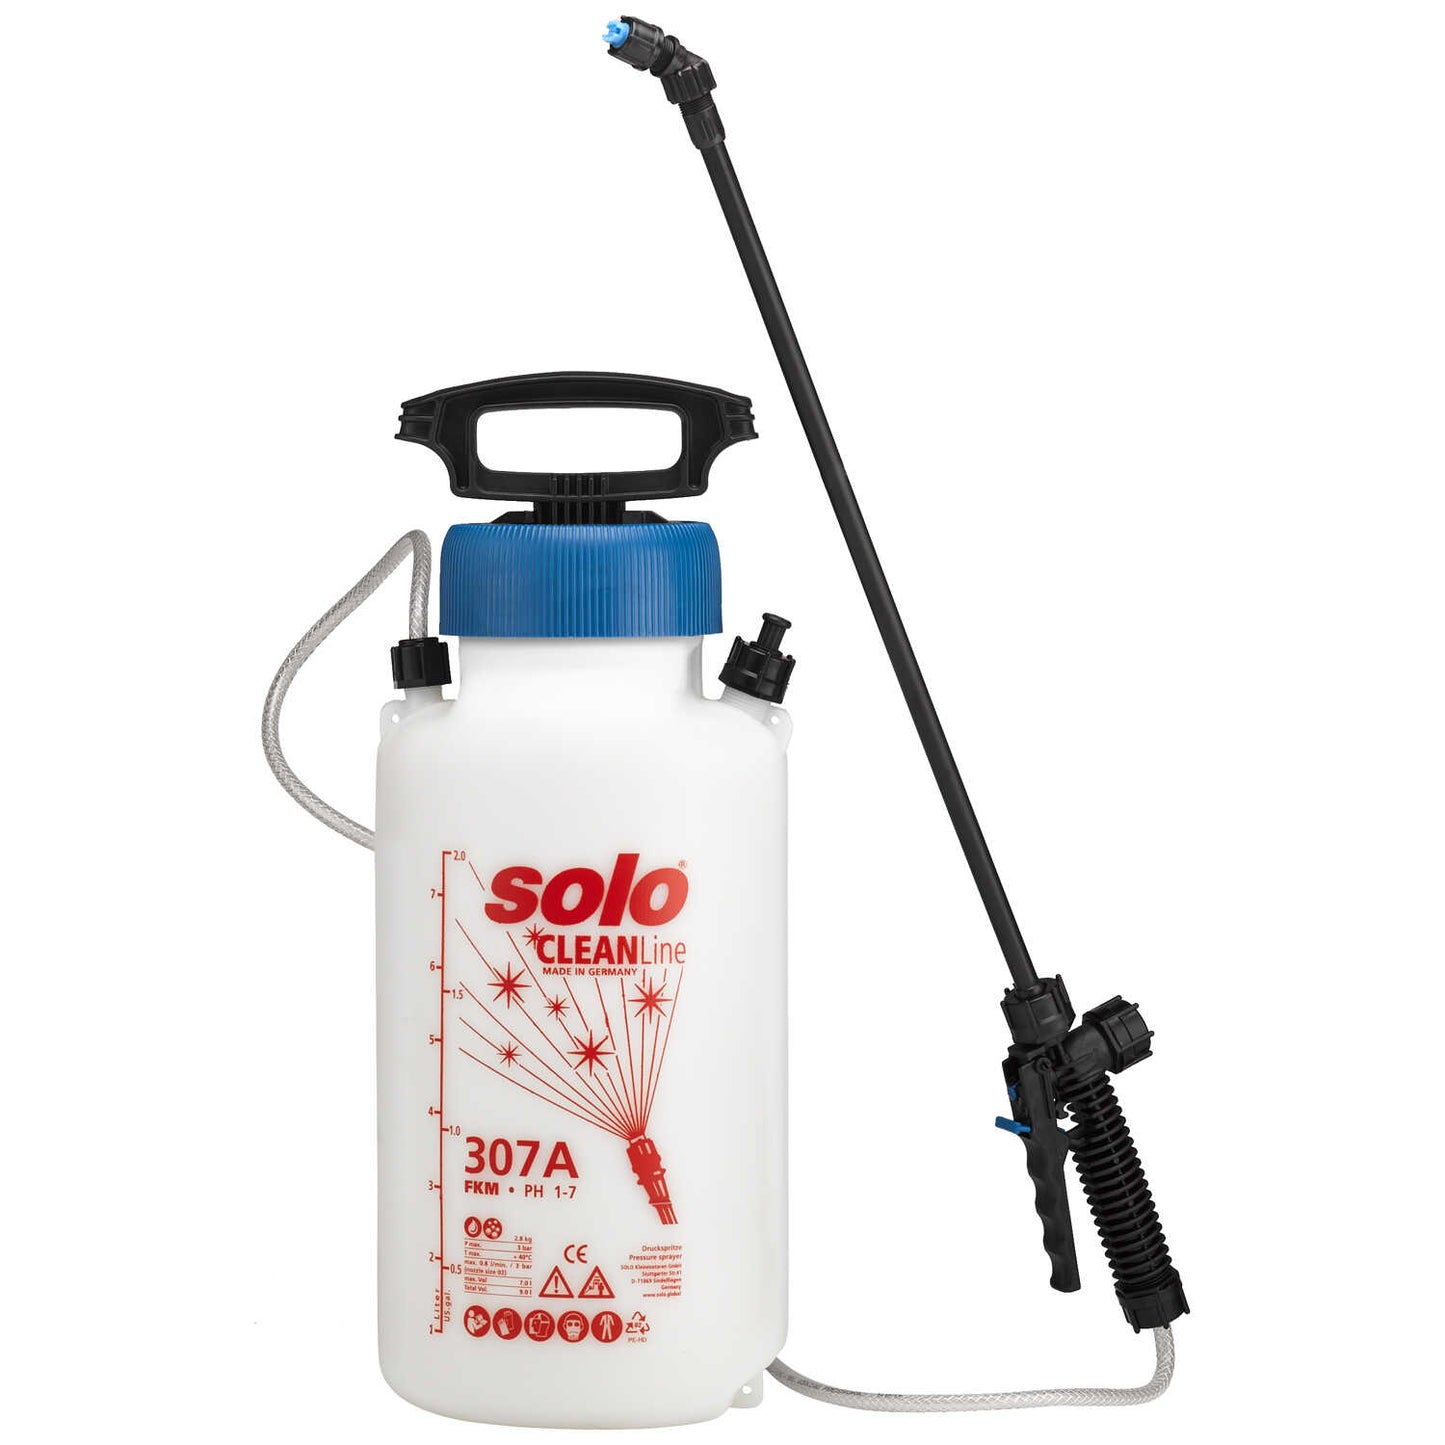 Solo® CLEANLine Industrial Handheld Sprayers 2-Gallon Capacity